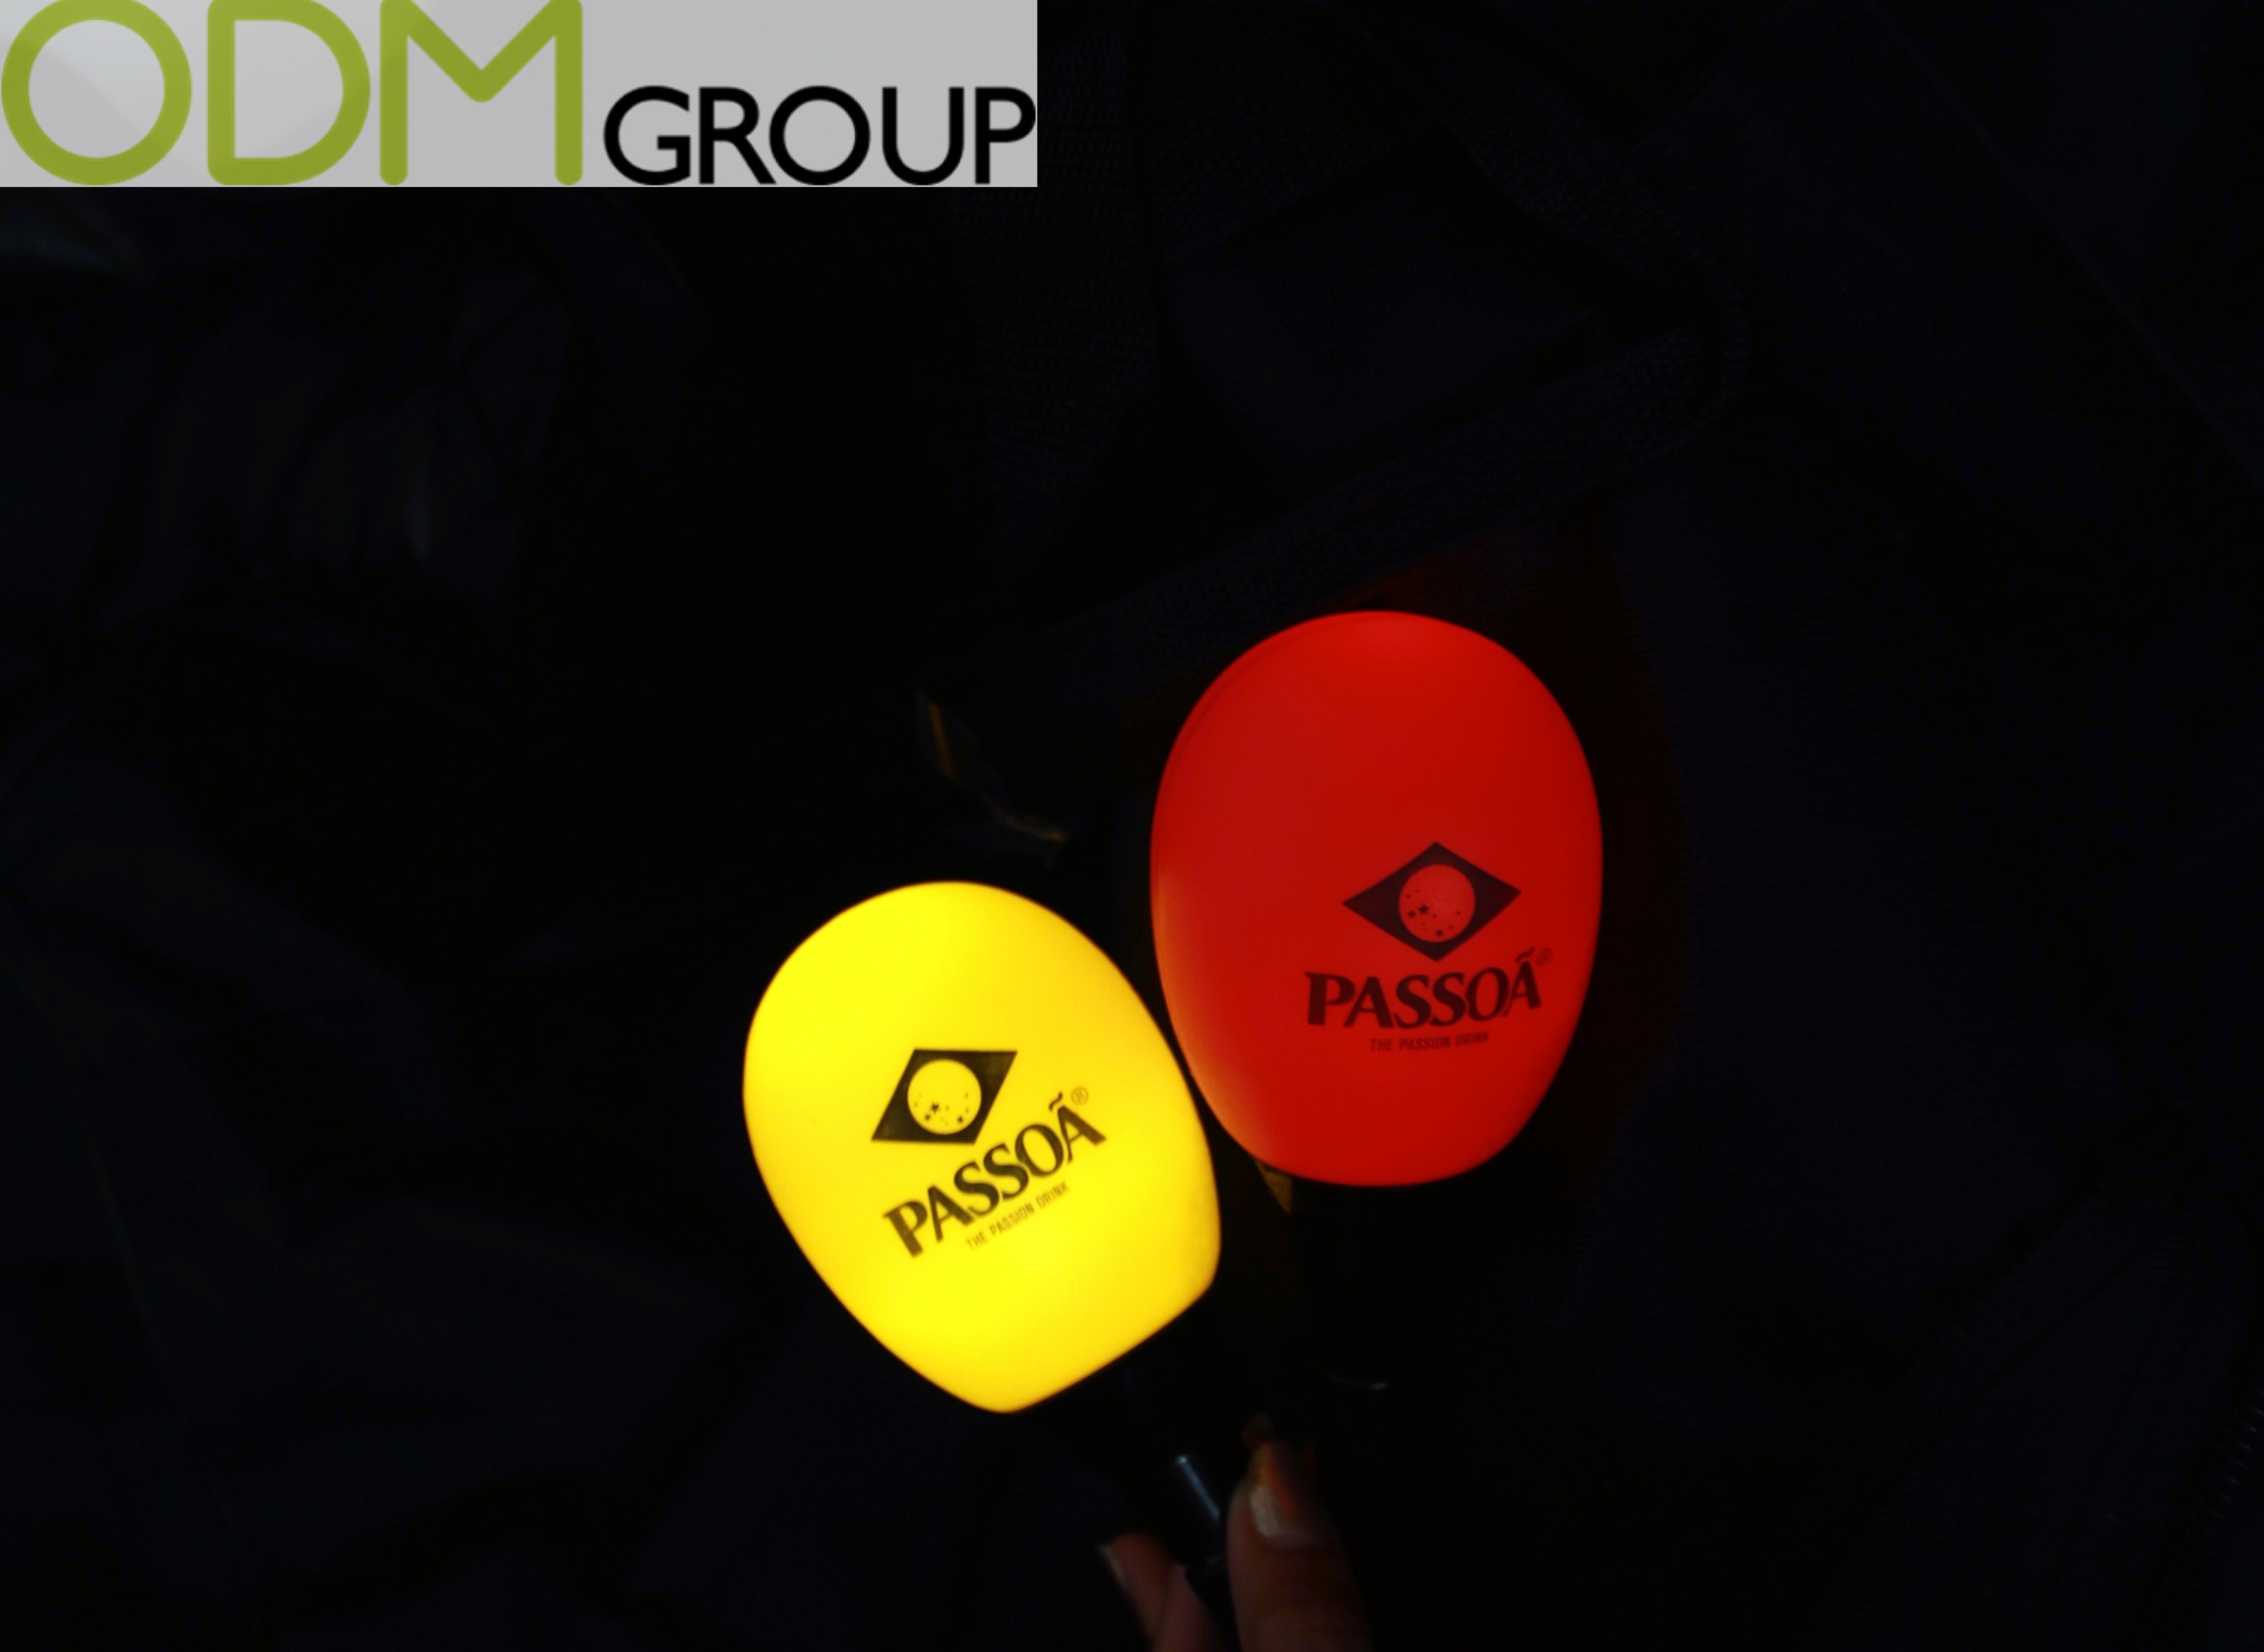 Promotional Idea for Party - Custom LED maracas by Passoa 